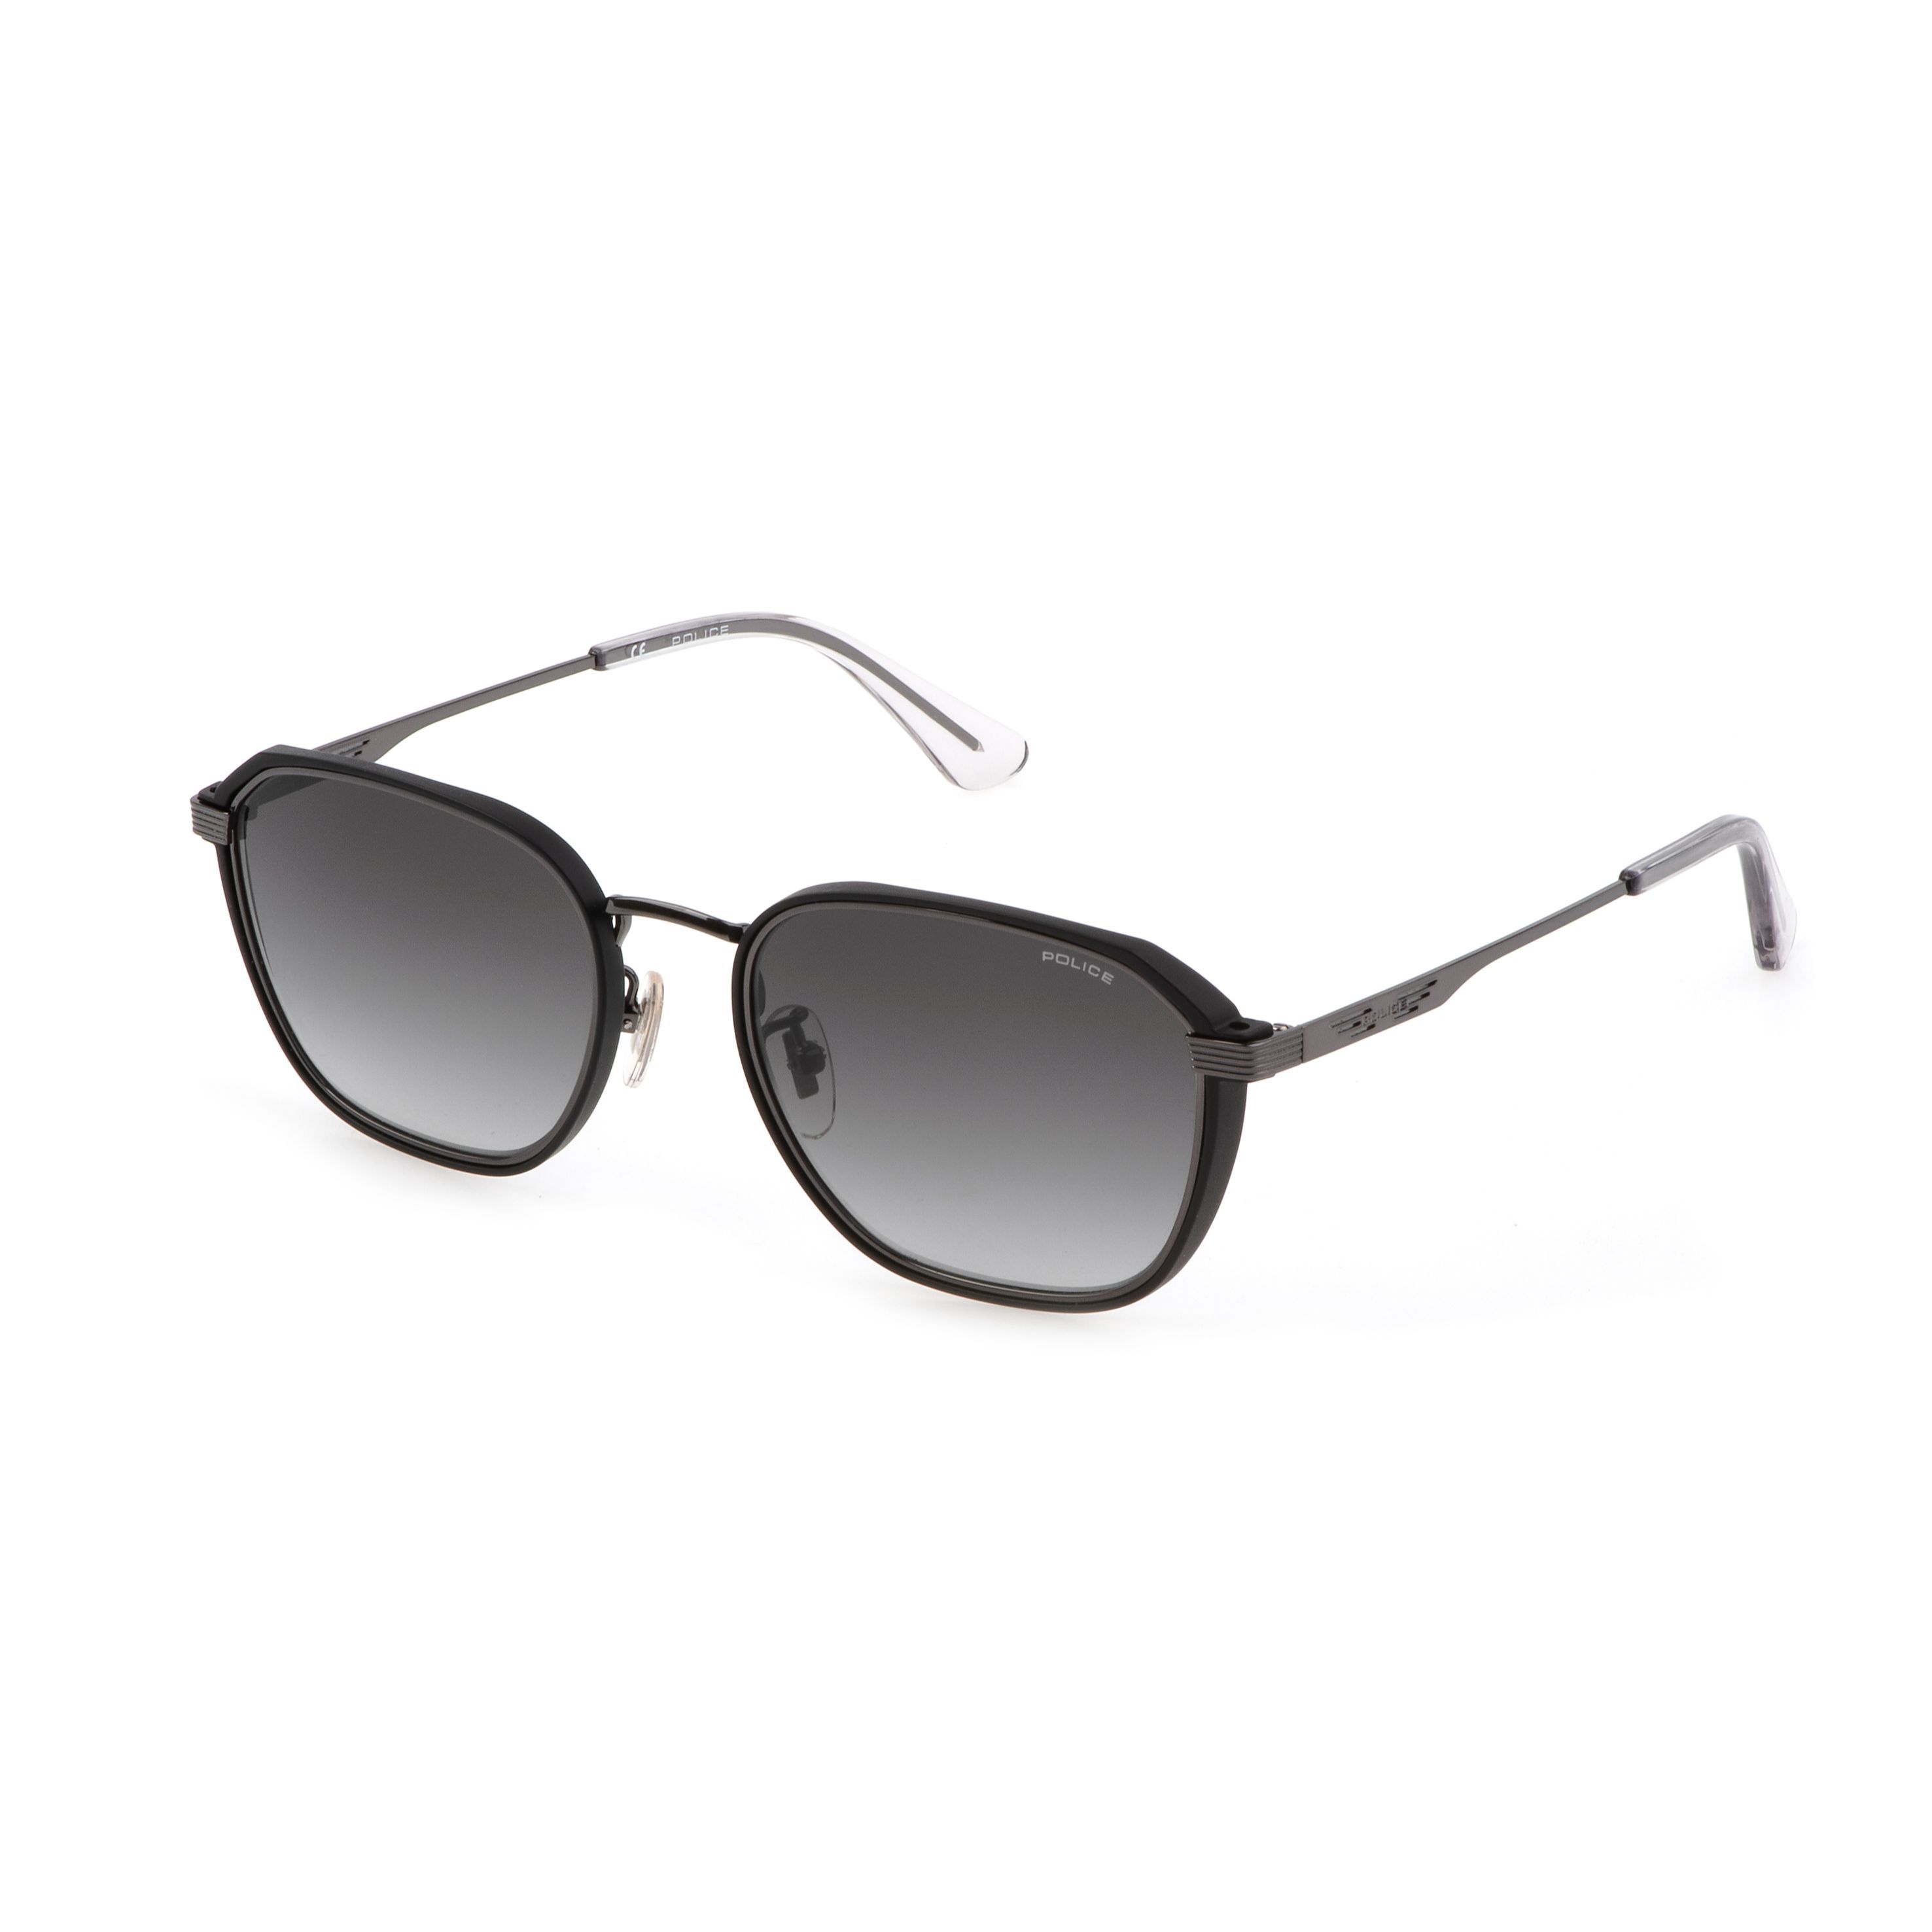 SPLD46M Panthos Sunglasses 568 - size 53